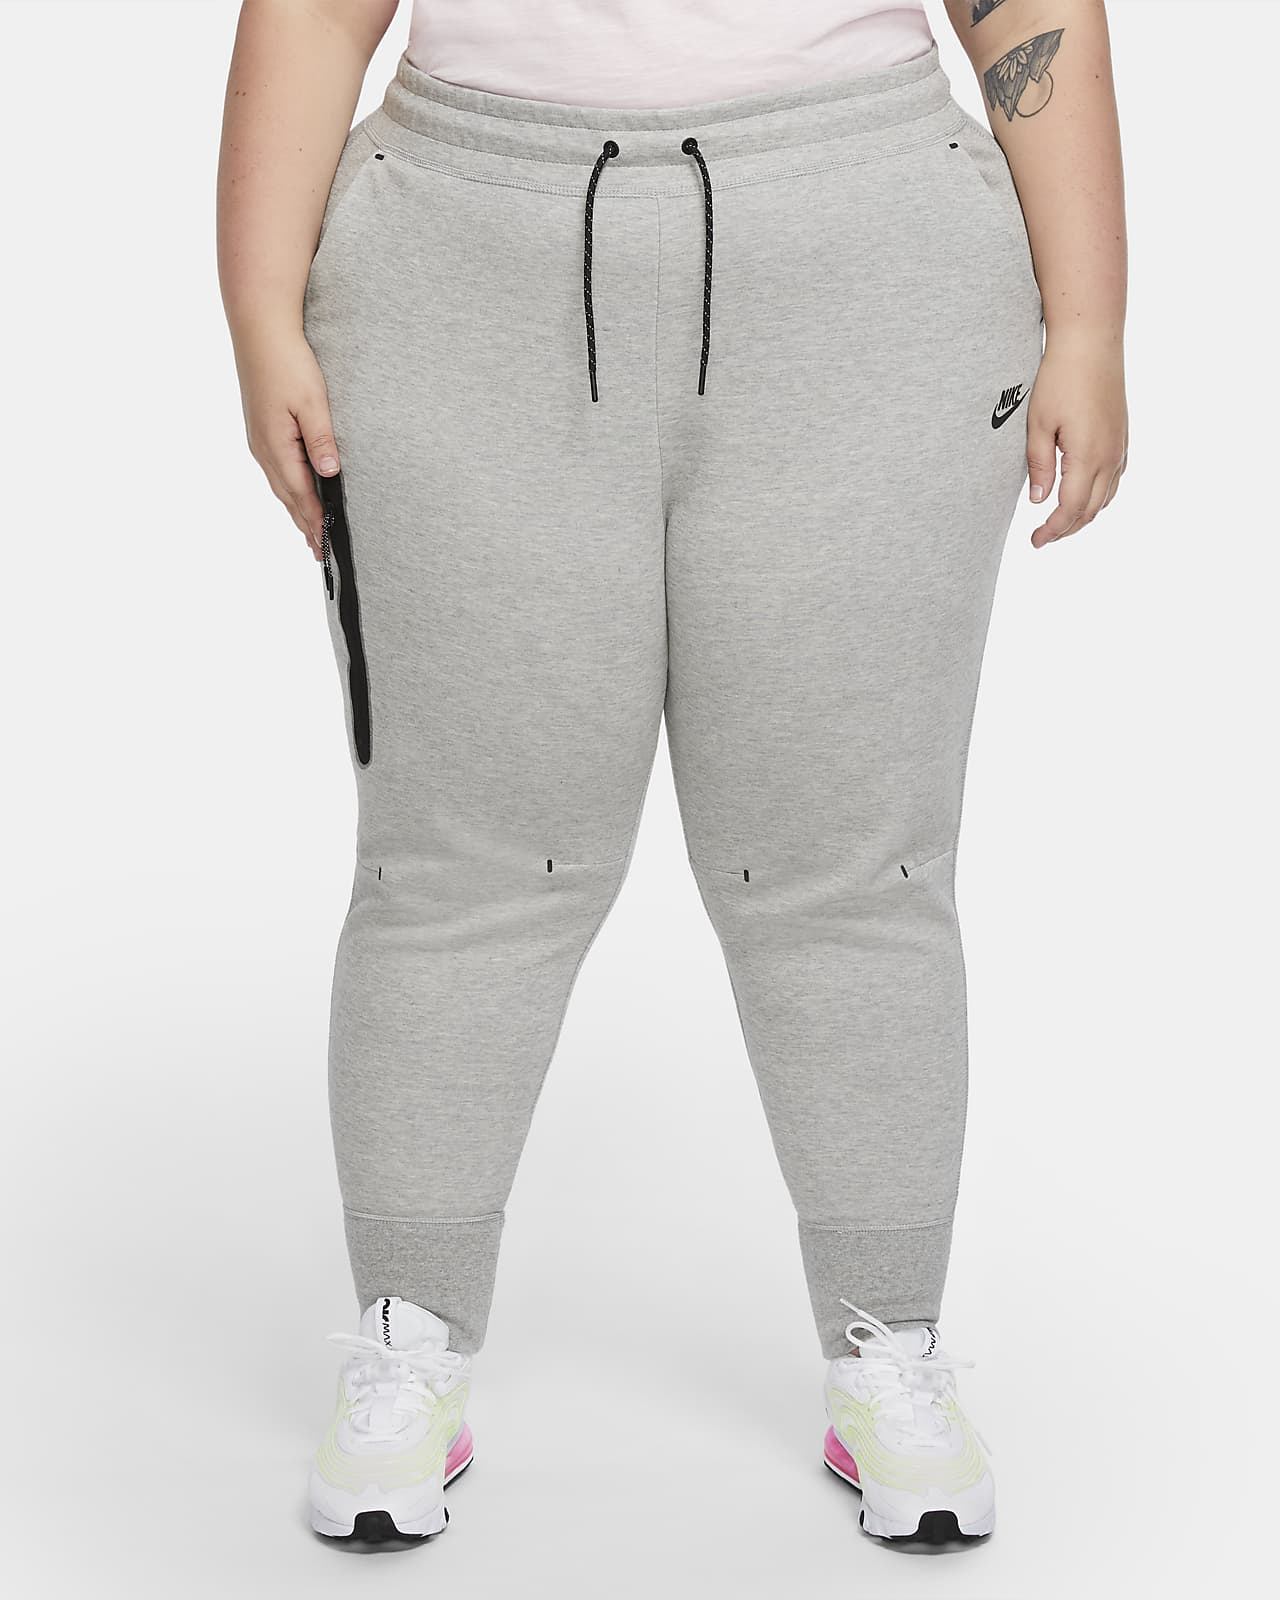 Pantalones para mujer talla grande Nike Sportswear Tech Fleece. Nike CL